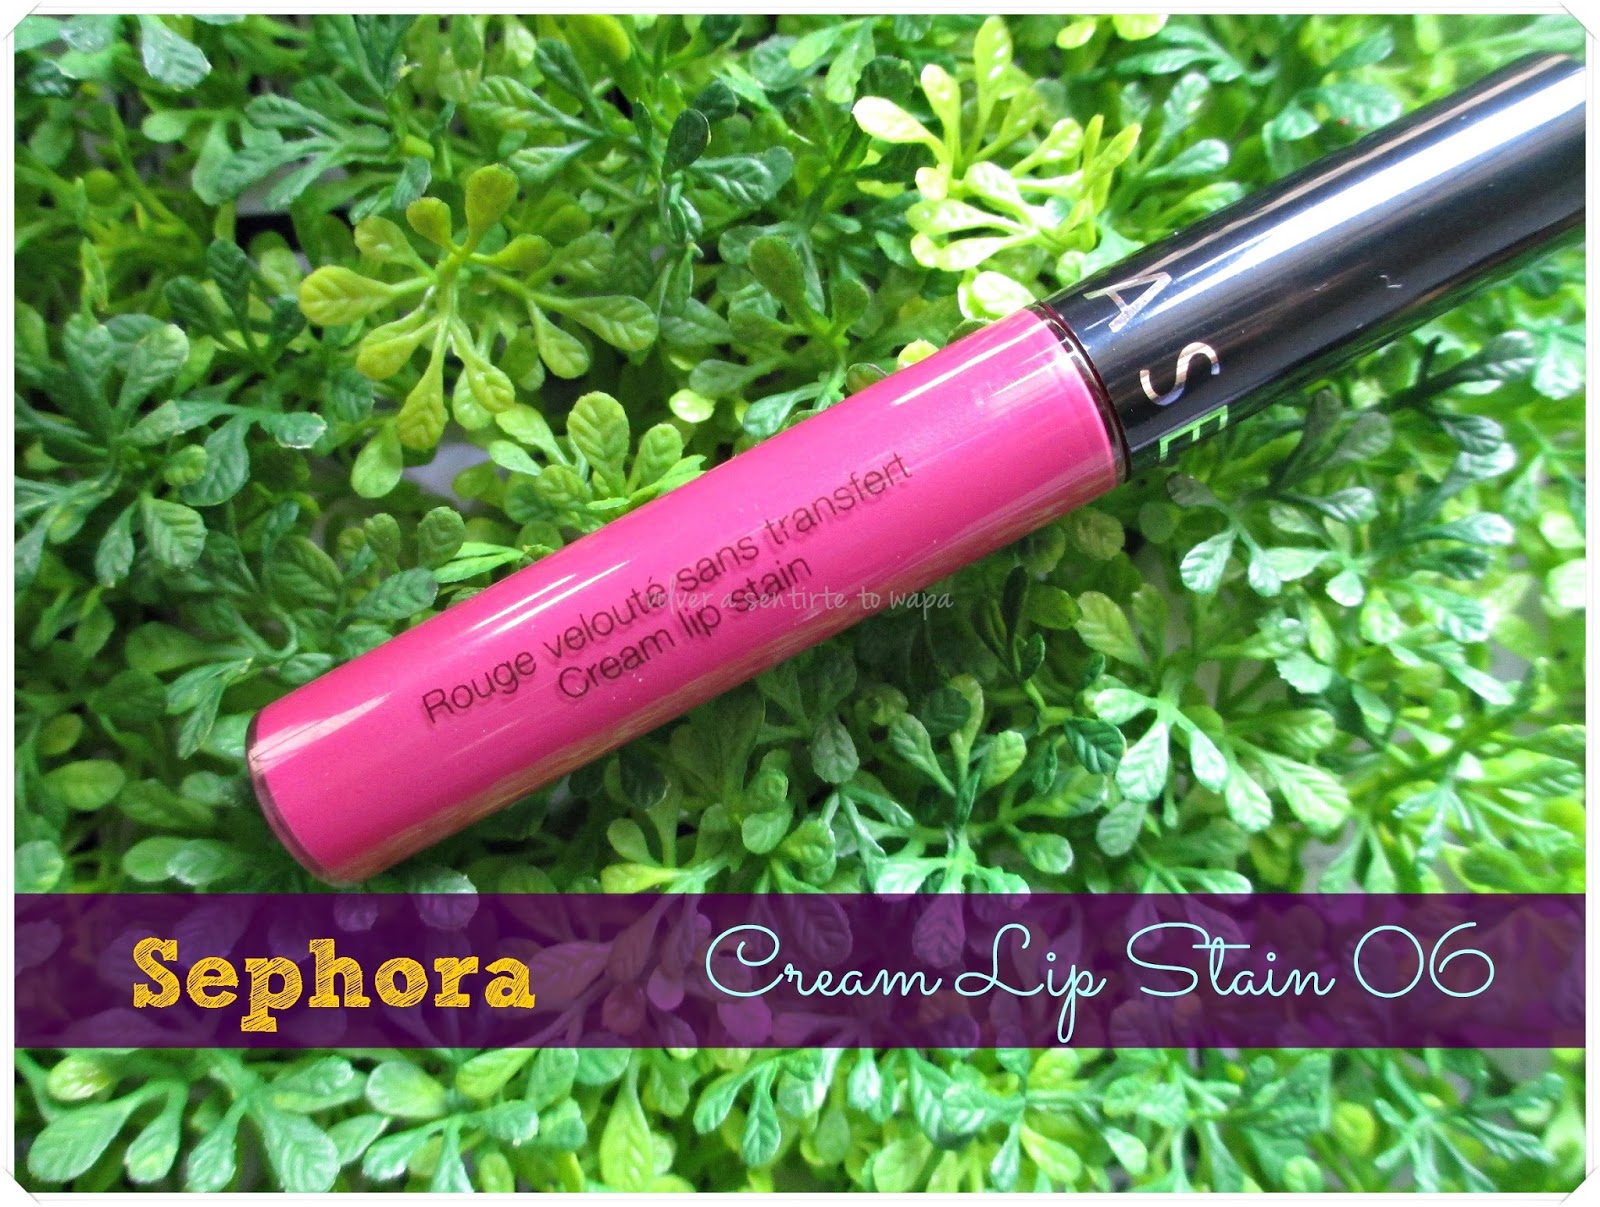 Cream Lip Stain 06 de Sephora: Review + Swatches